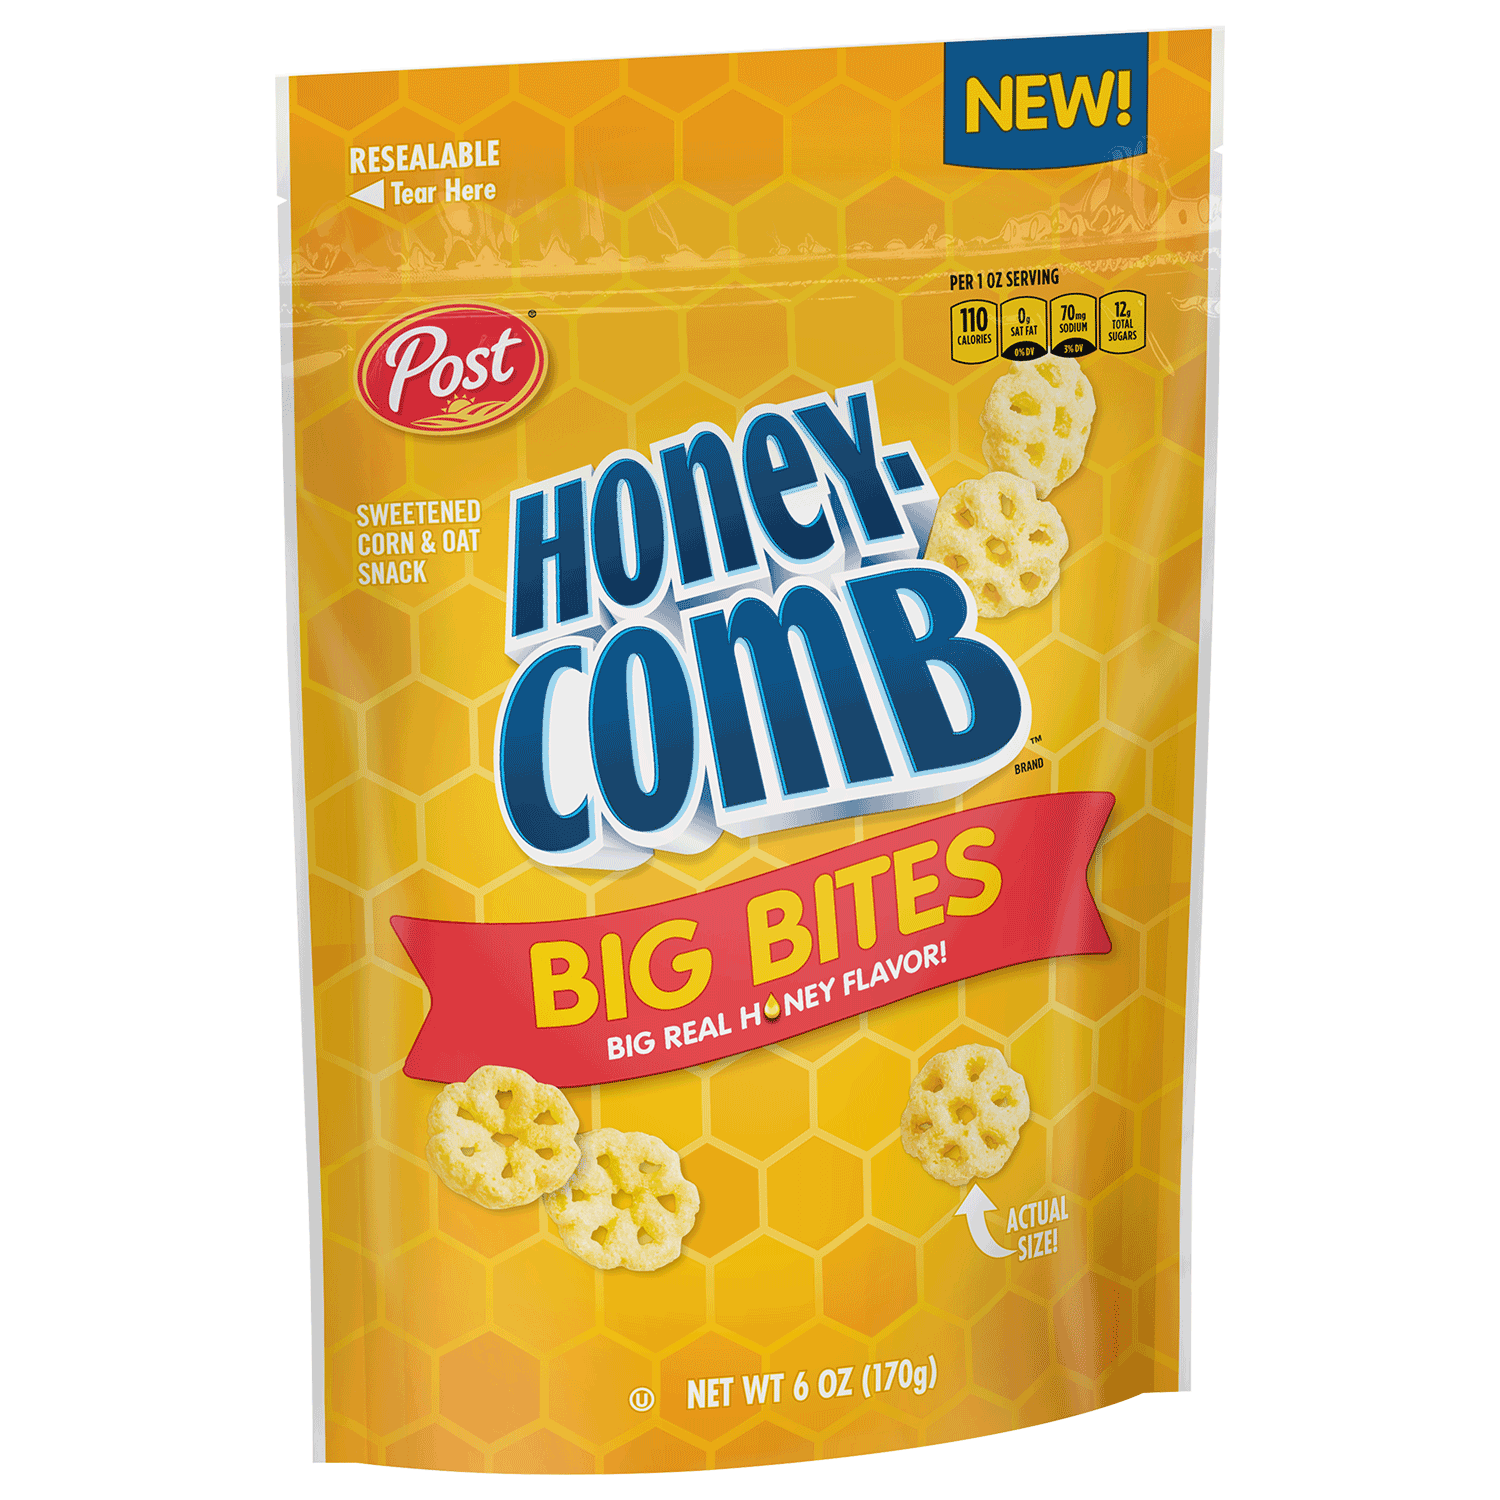 Honeycomb Big Bites Product Packaging